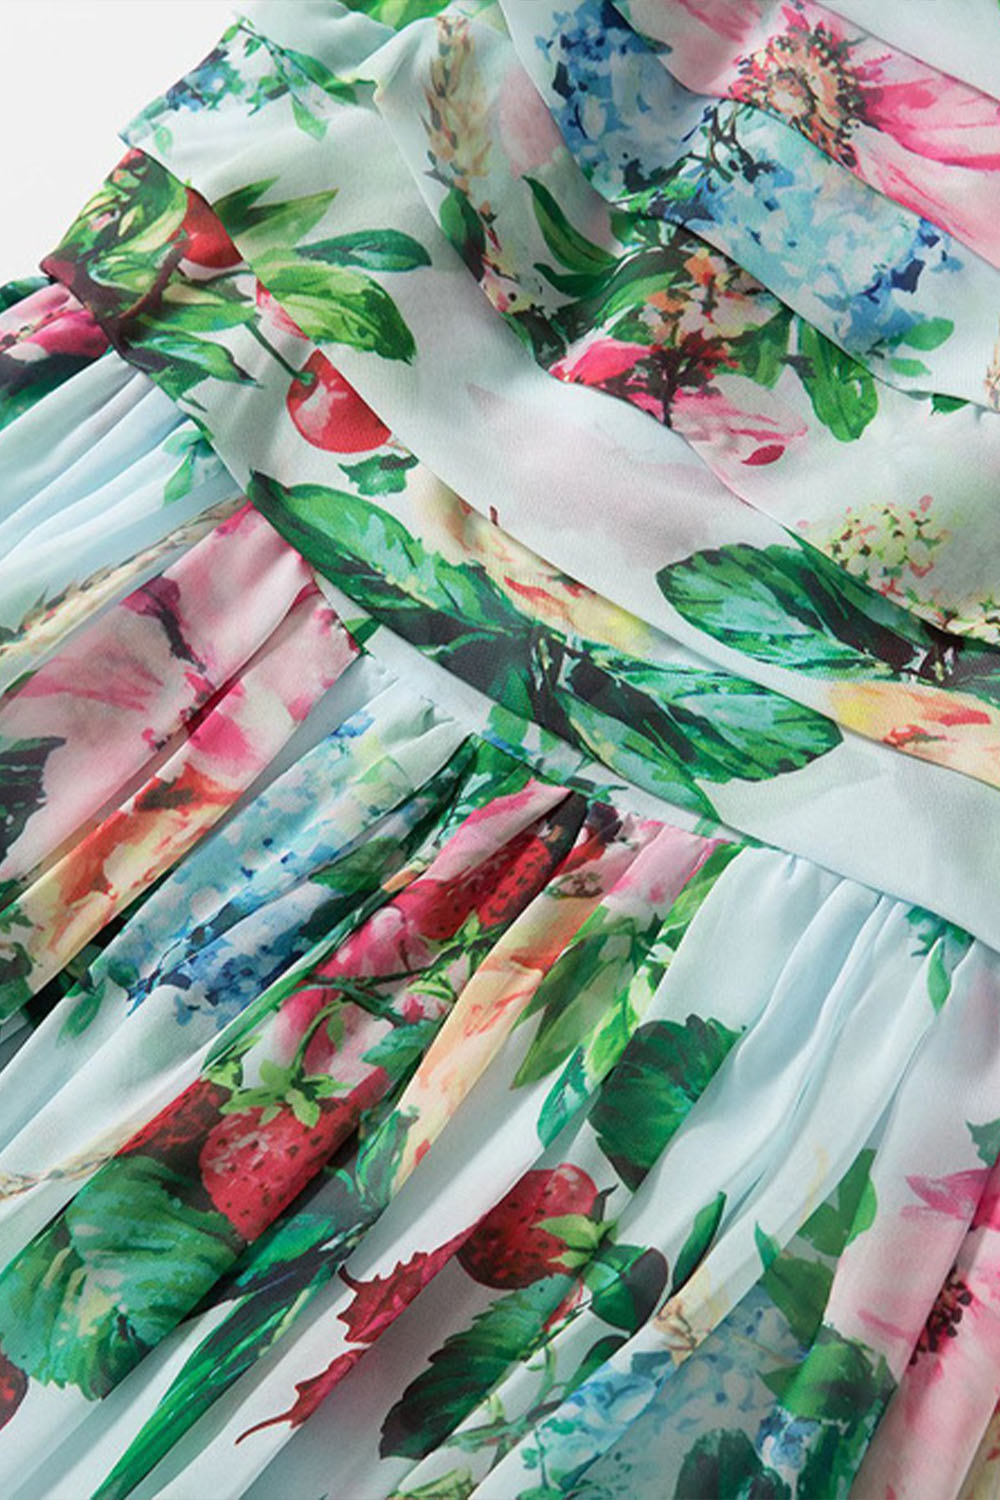 Holiday Green Floral Print Fold Sleeveless Maxi Dress